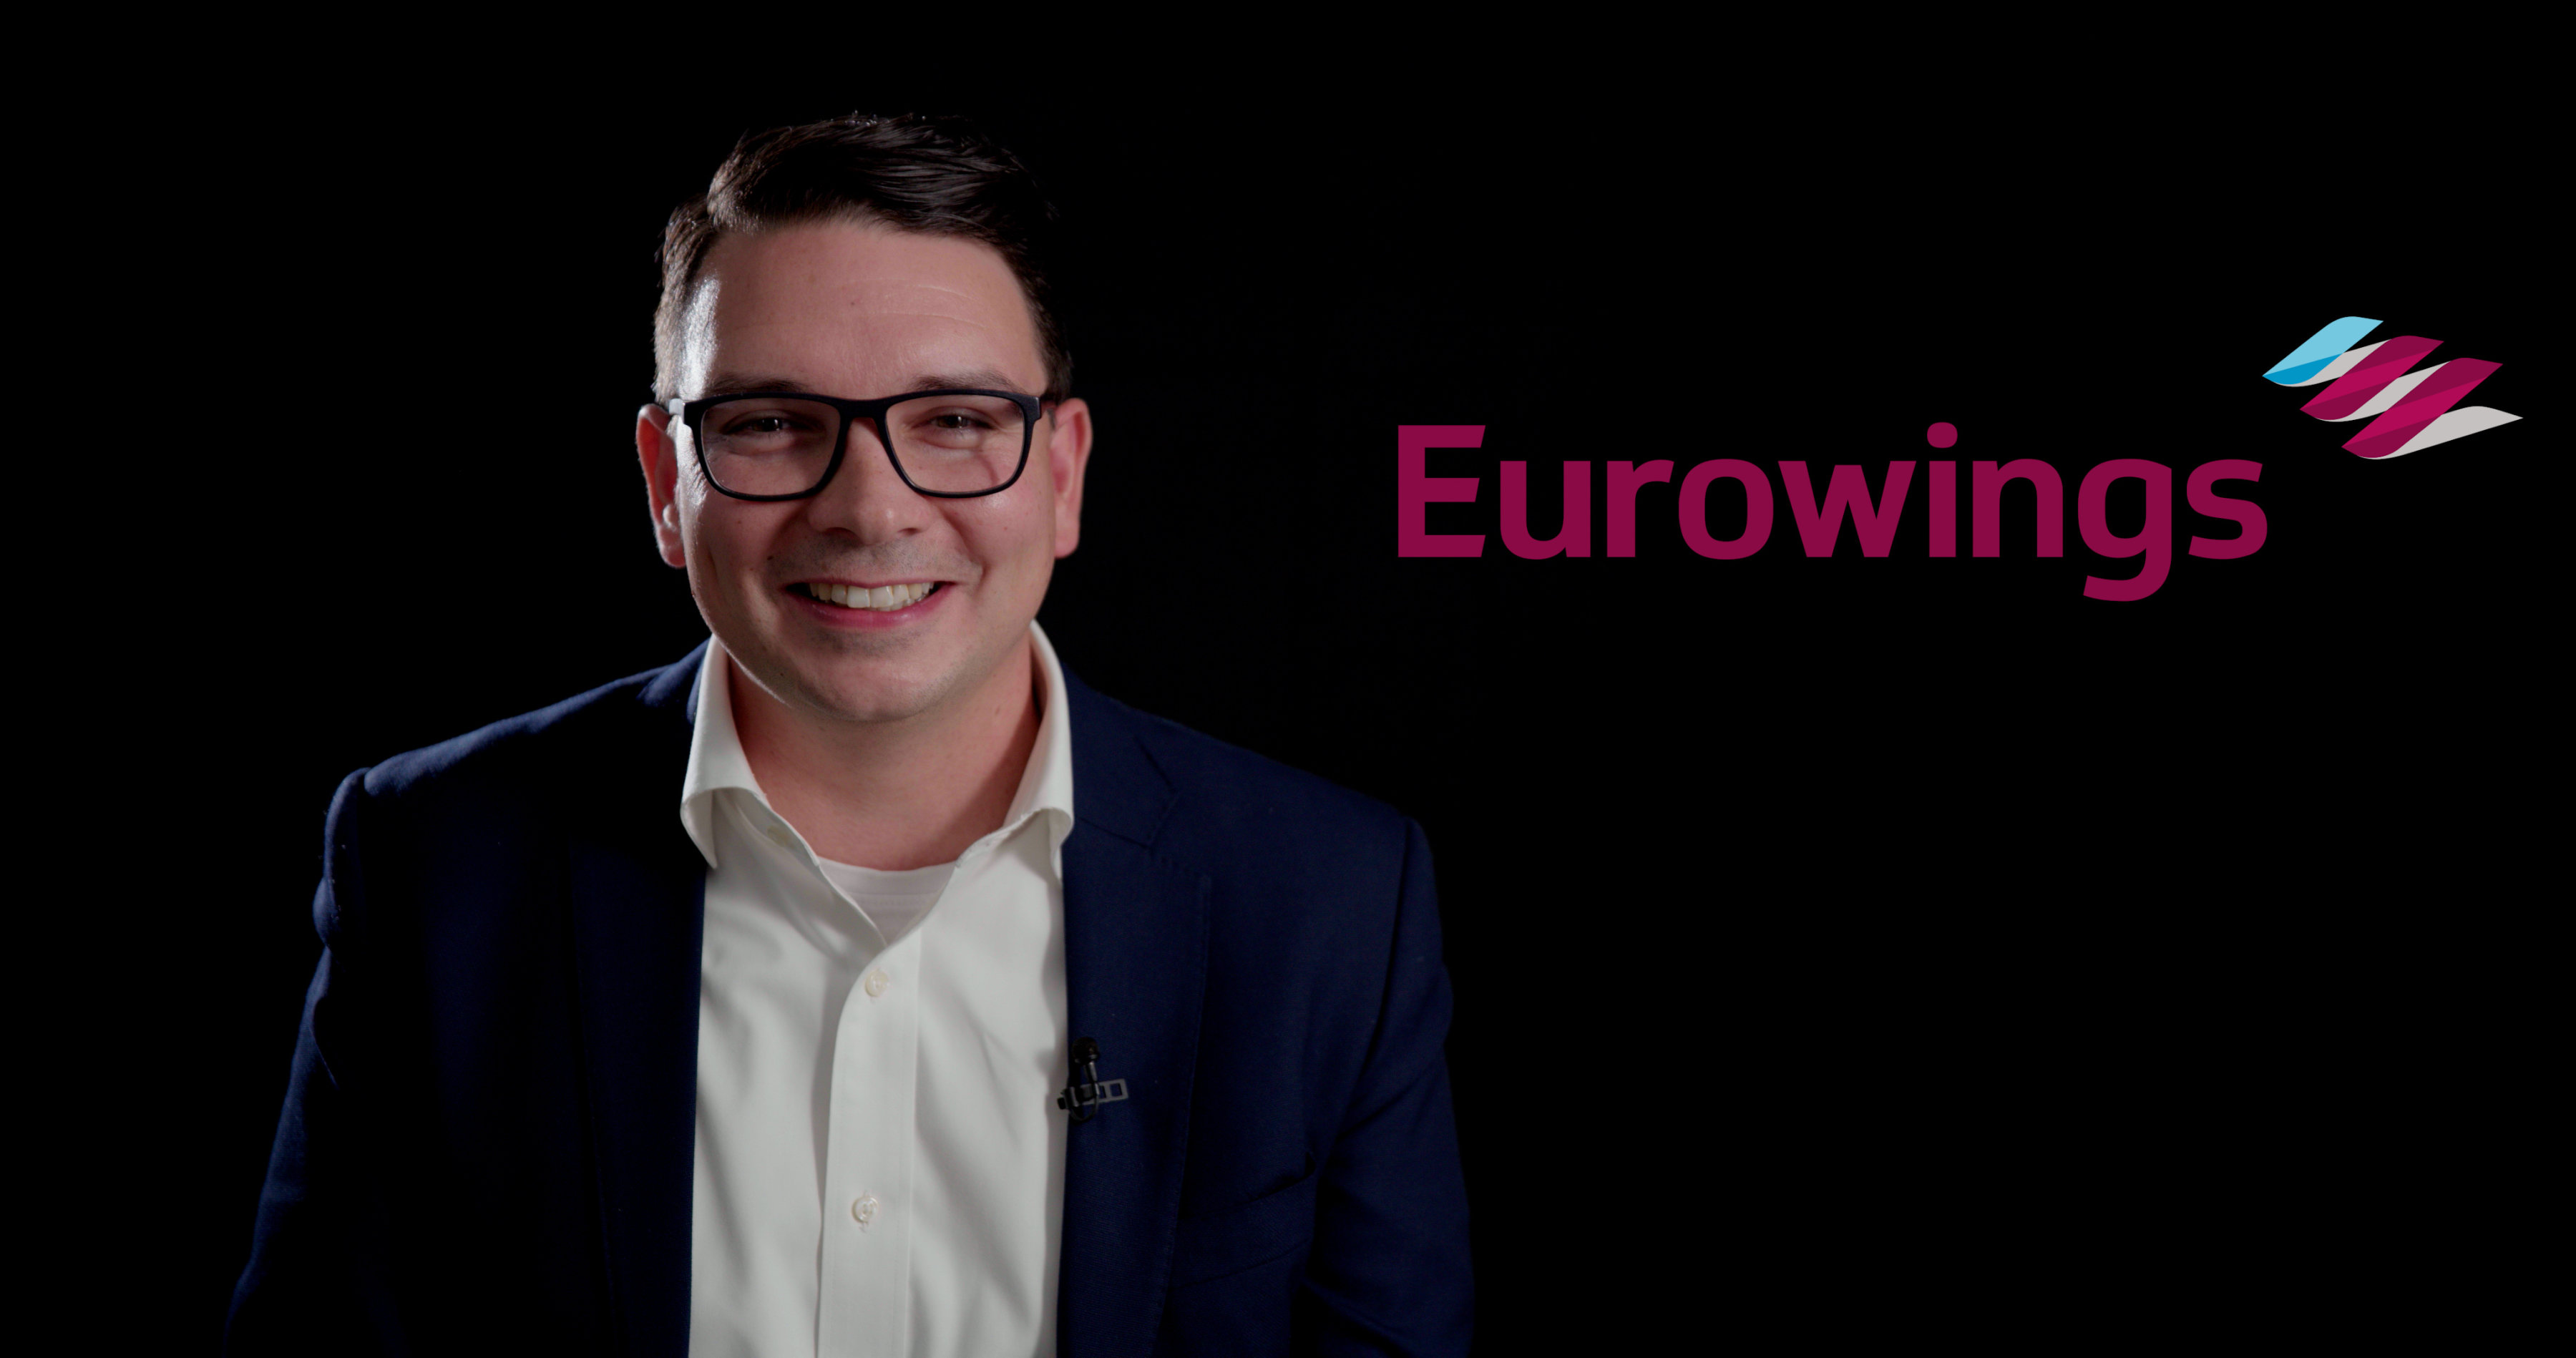 Eurowings logo with Daniel Schönheim